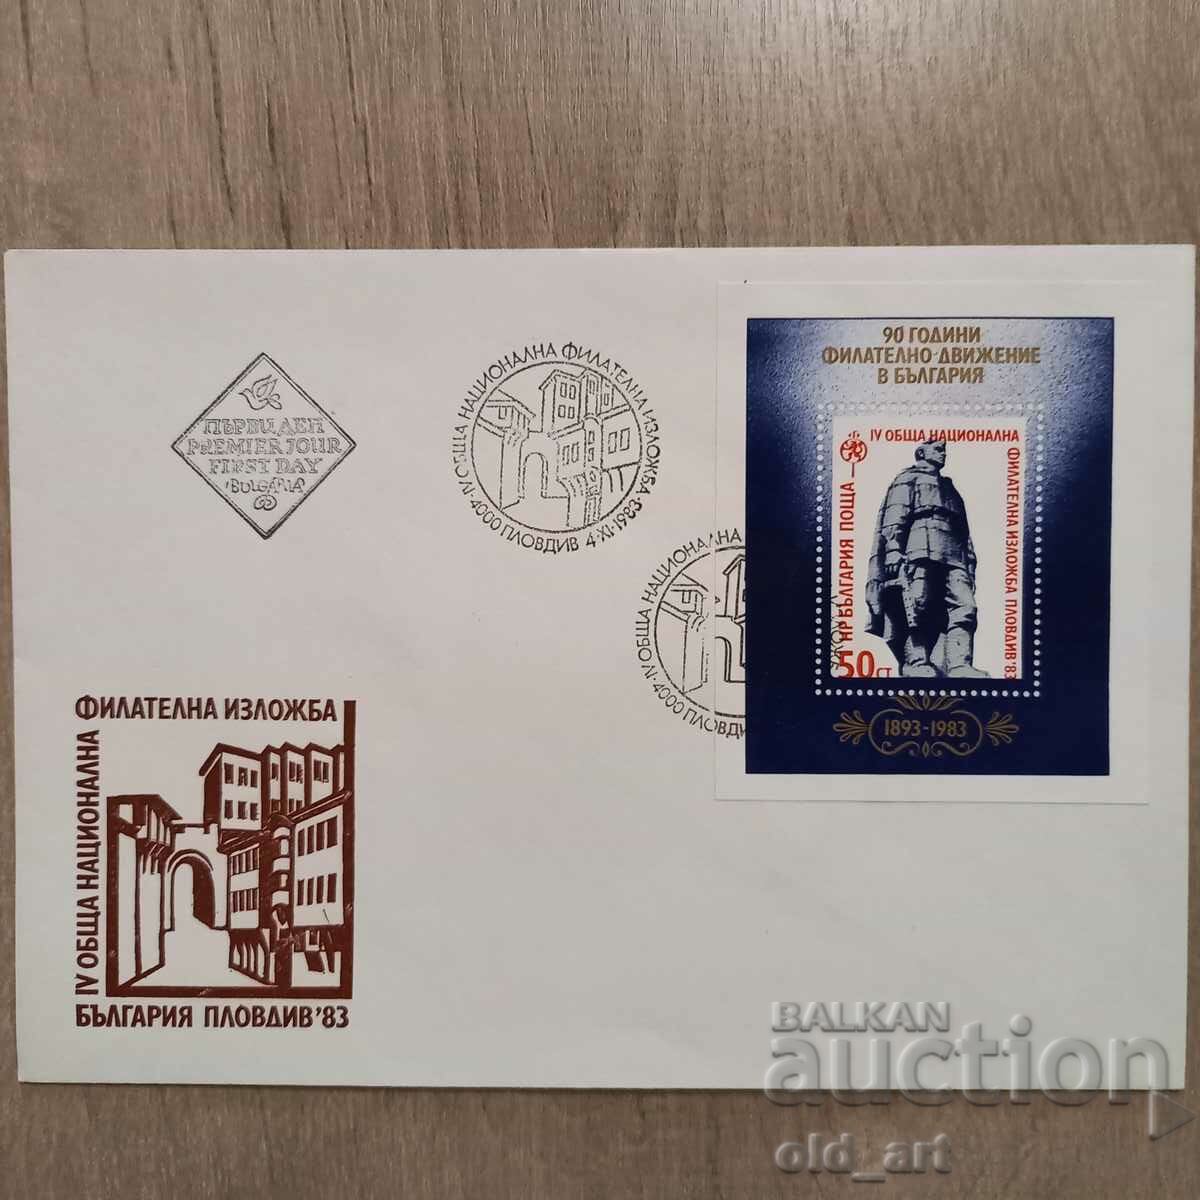 Postal envelope - IV General nat. philatelic exhibition Plovdiv 83